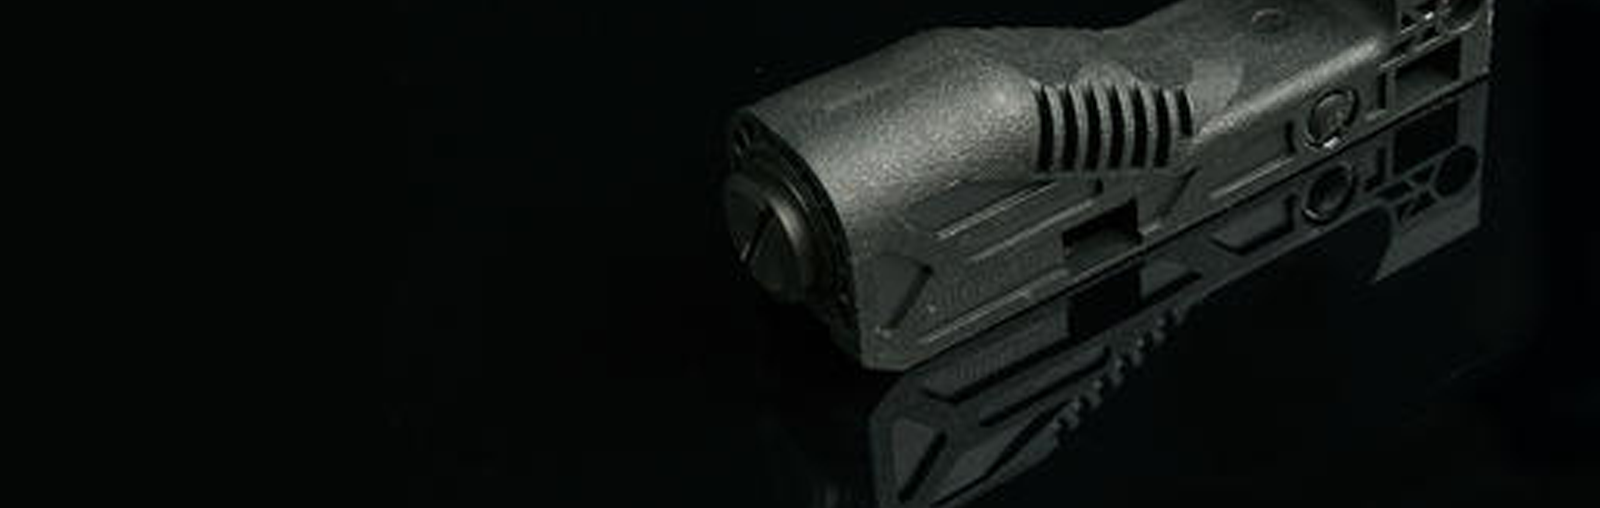 Bushnell Verifies High Detail Optics Designs with 3D Systems ProJet MJP 2500